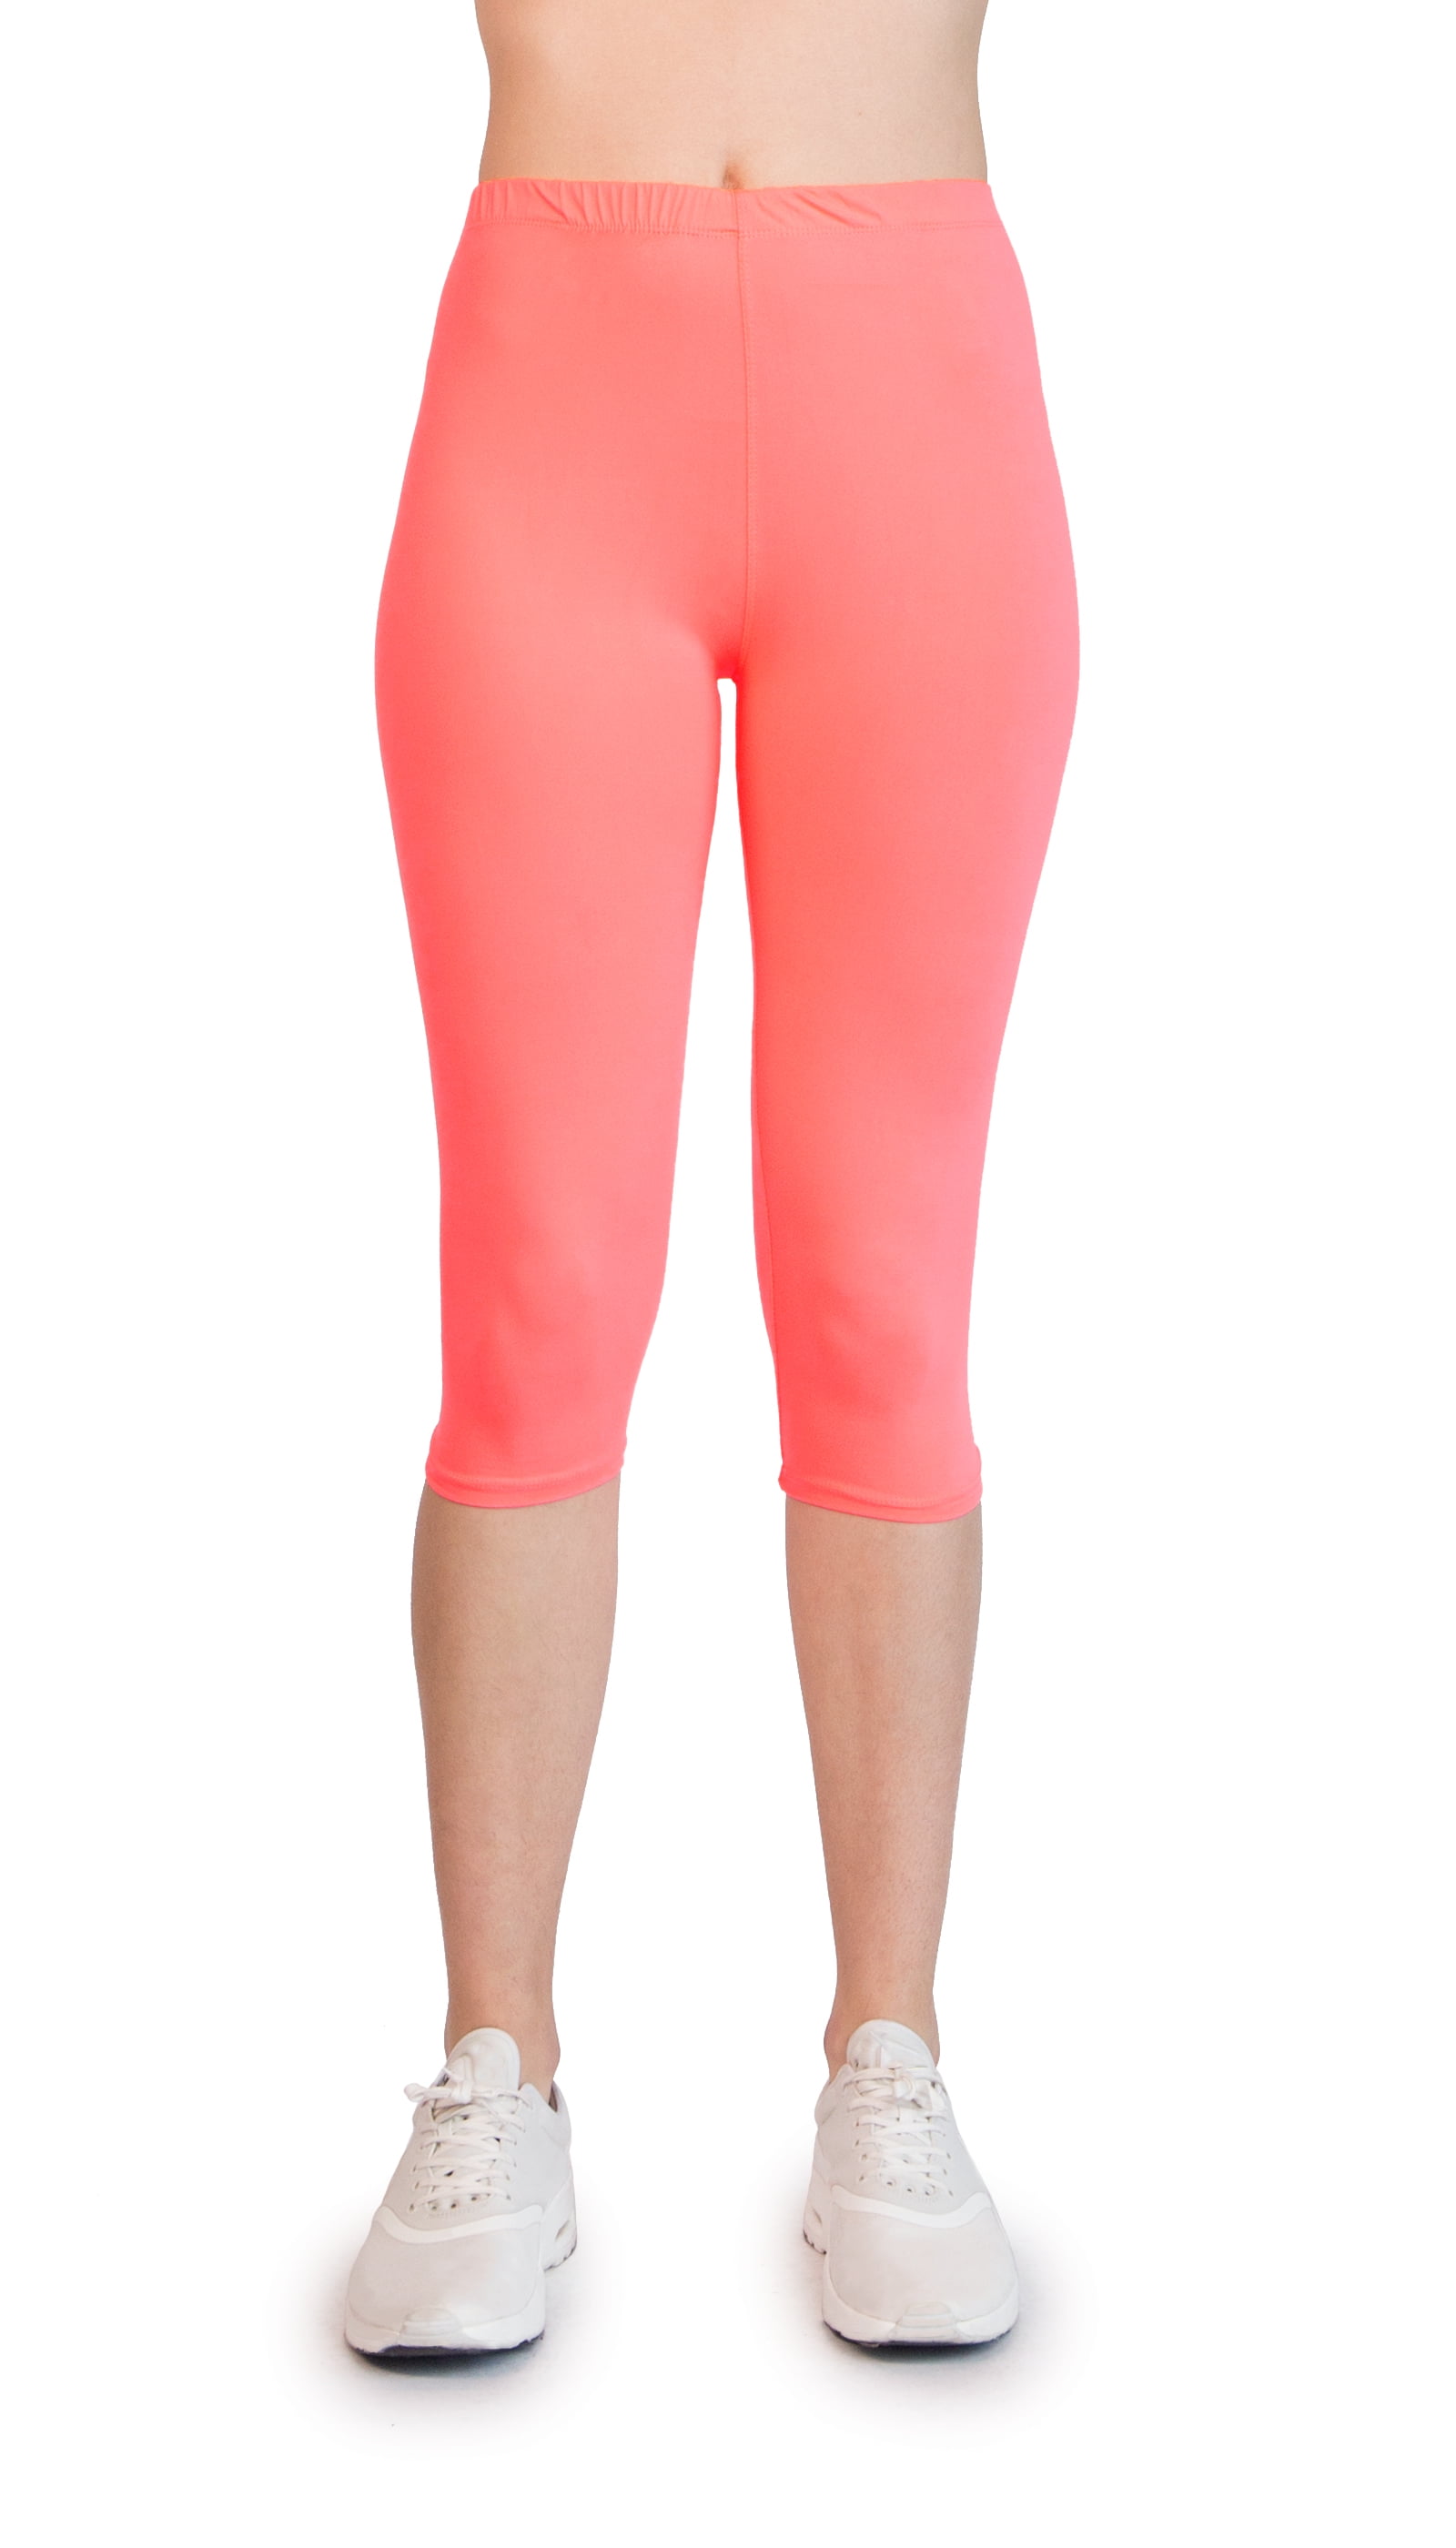 Torrid Women's Size 1 1X XL 16 Liquid Neon Pink Capri Pants Premium Leggings  New